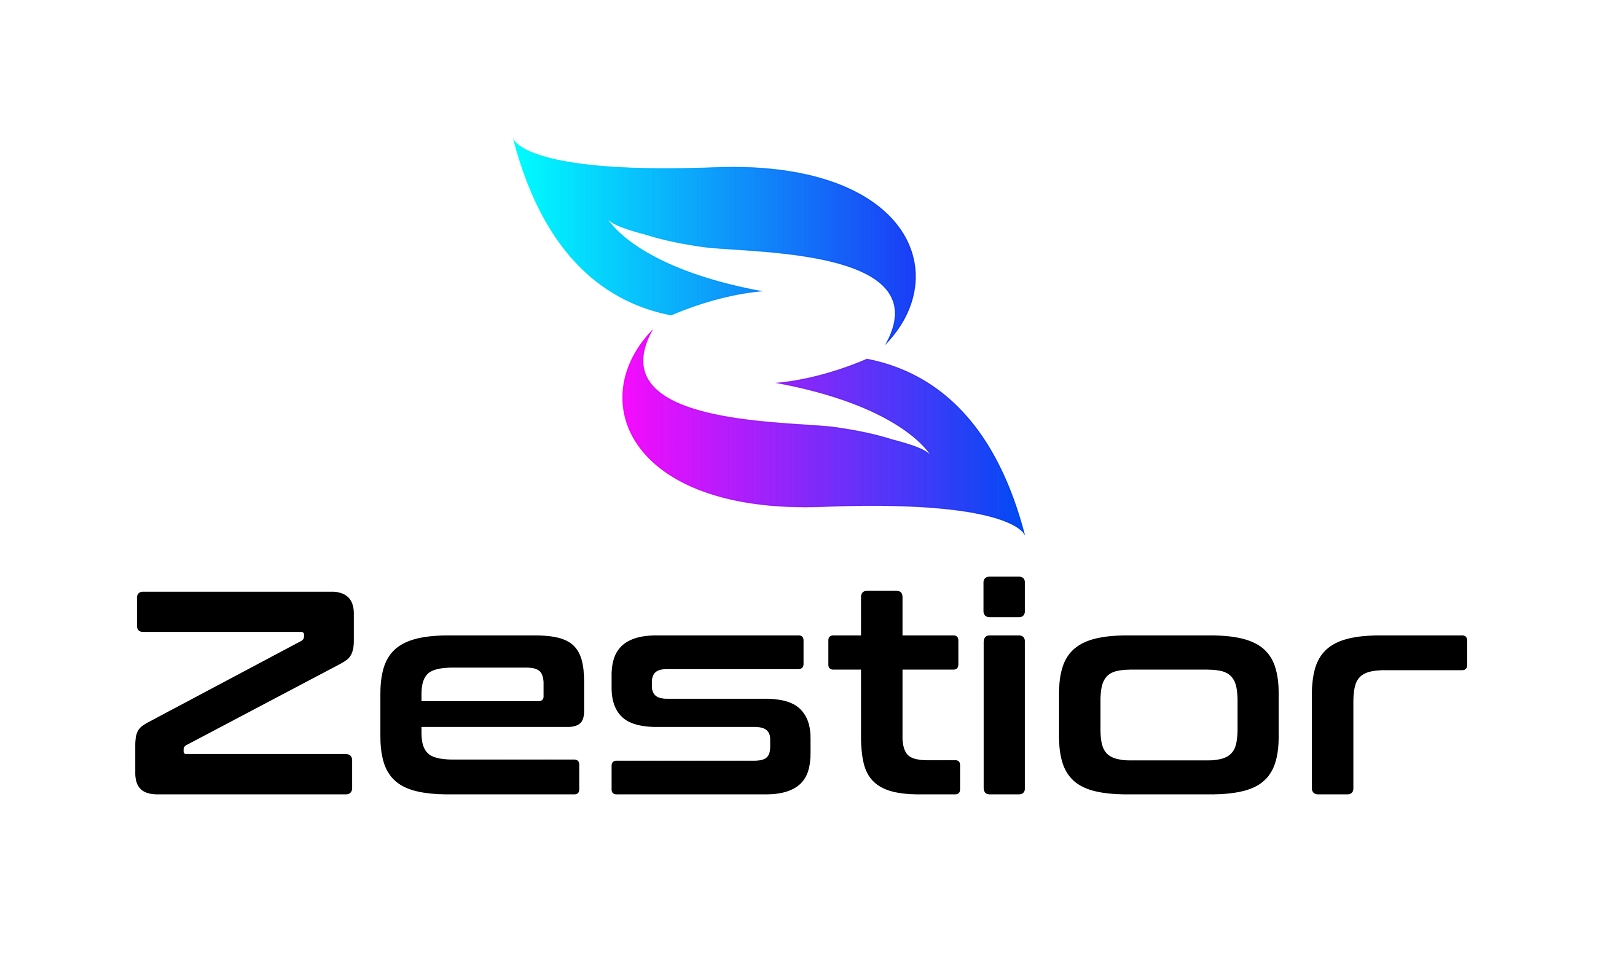 Zestior.com - Creative brandable domain for sale